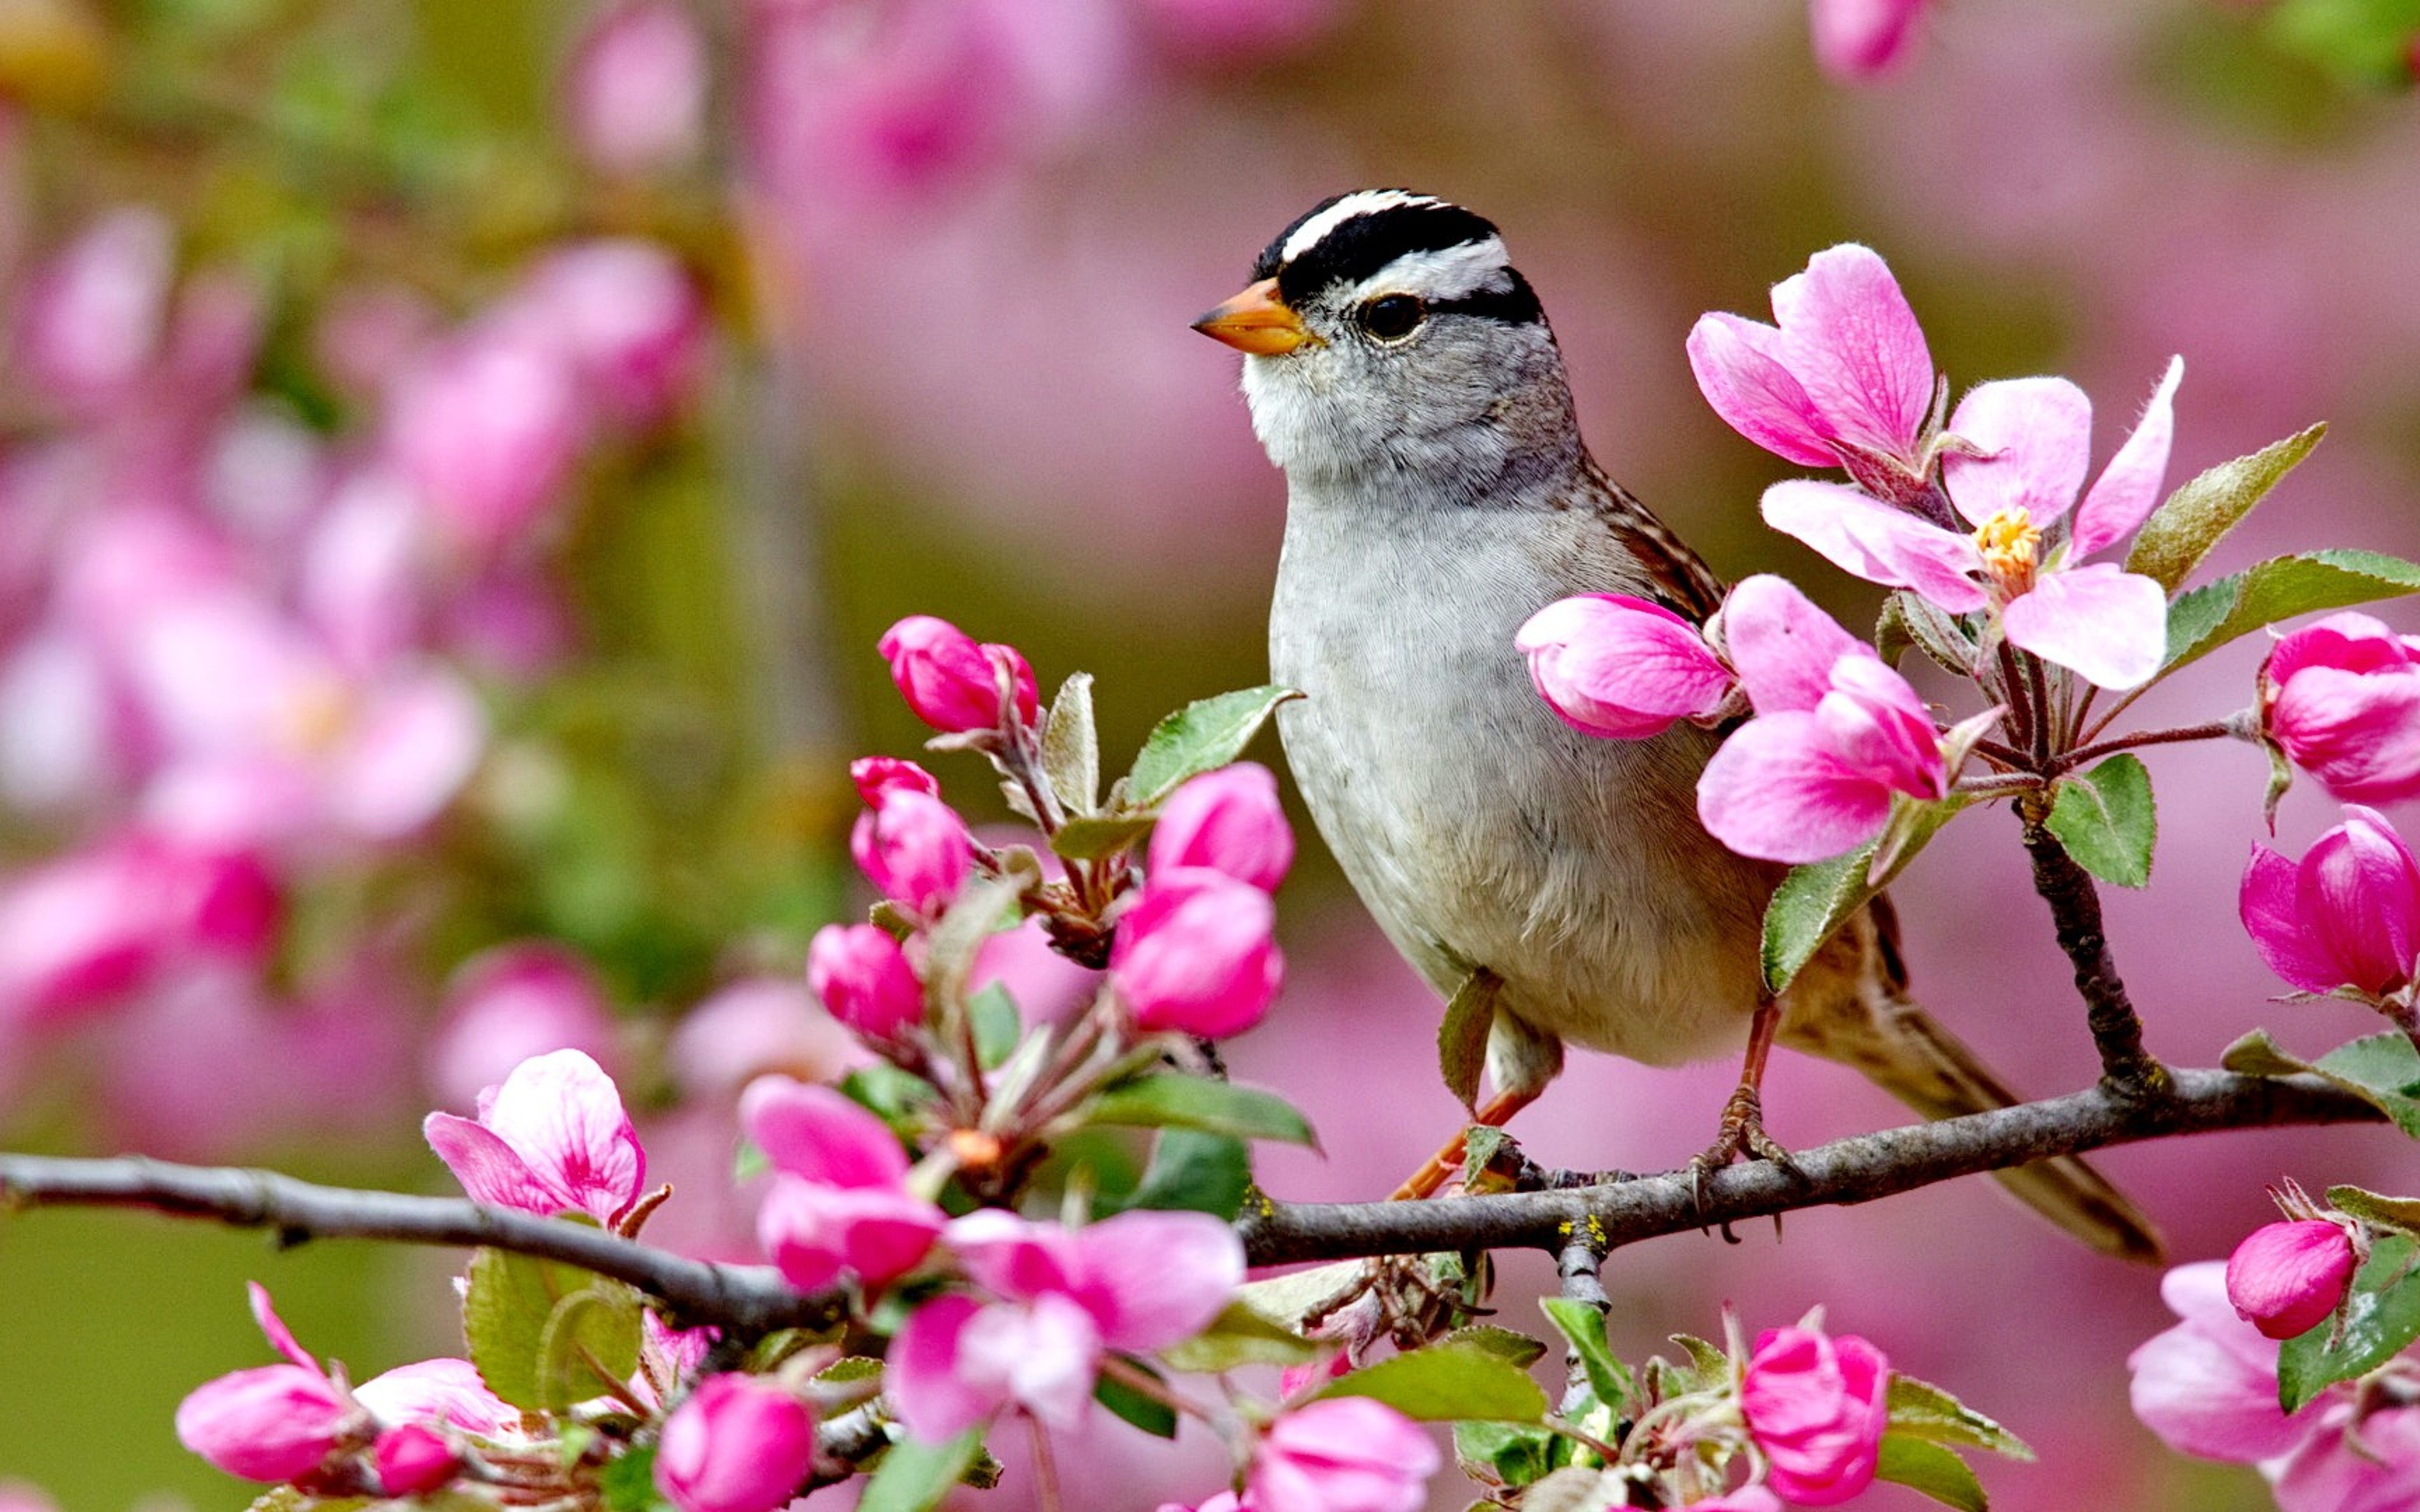 Bird on a blossom branch - spring season